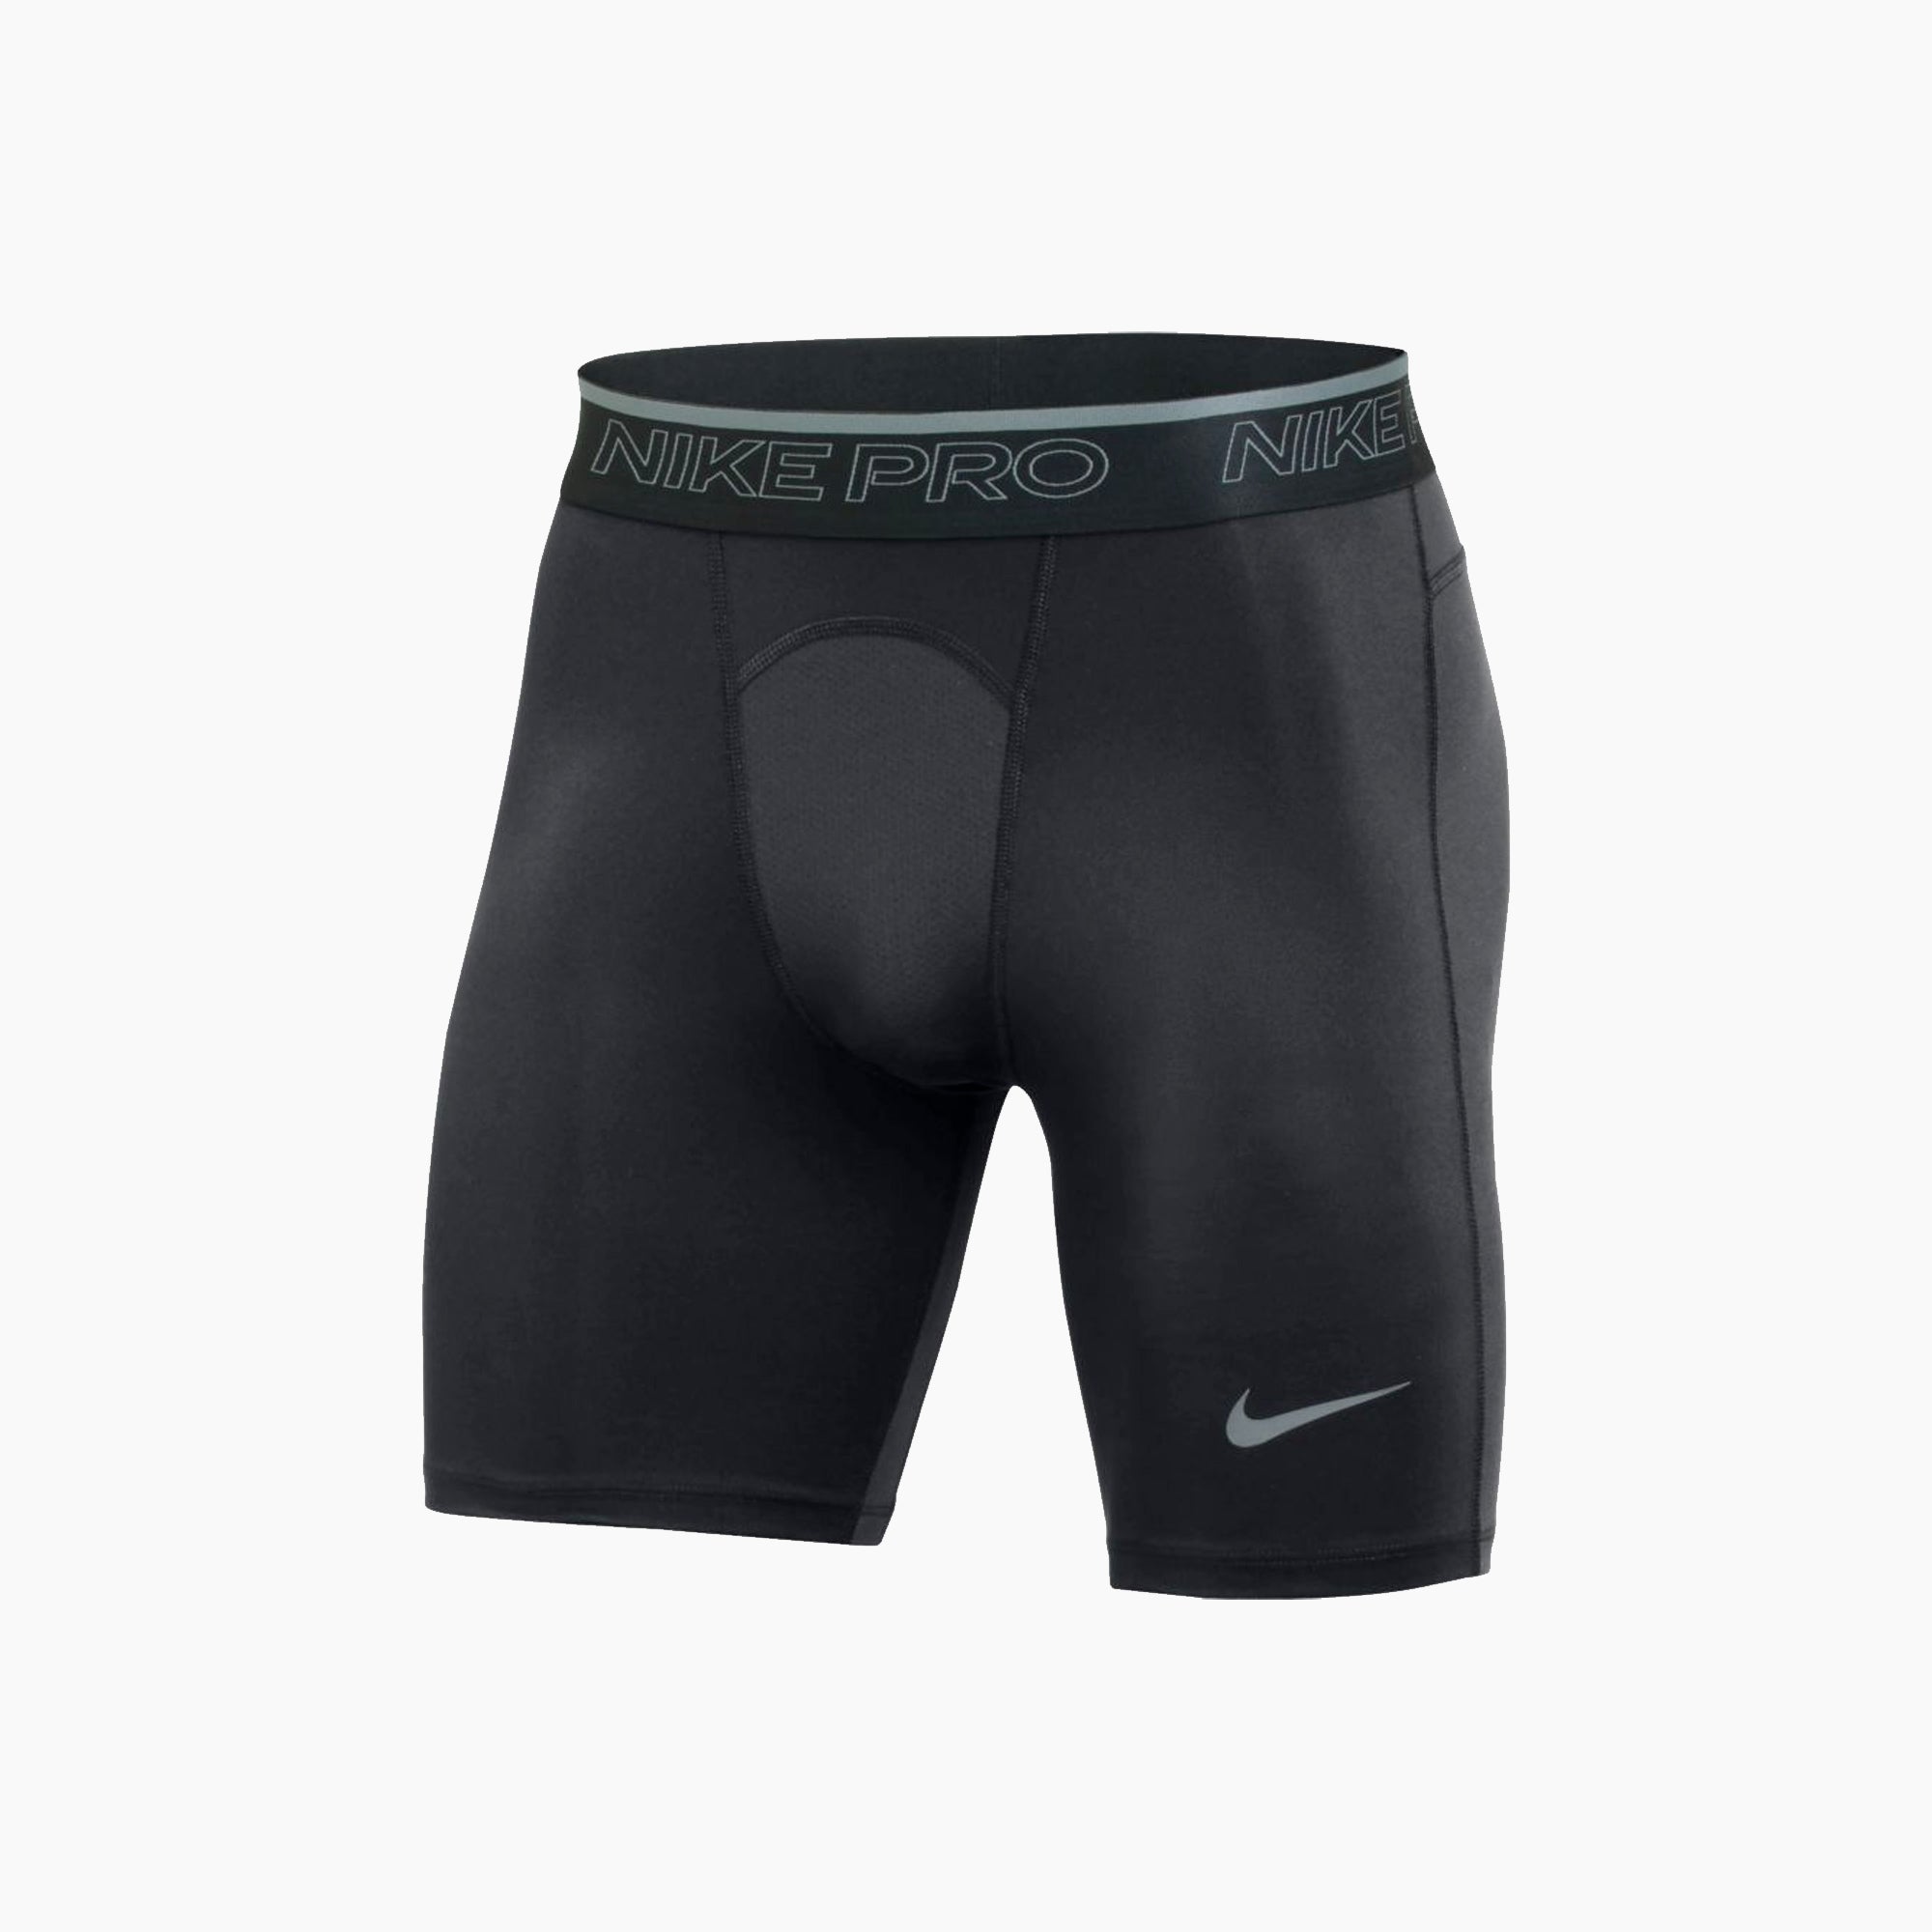 Nike Pro Dri-Fit Compression Shorts - Black